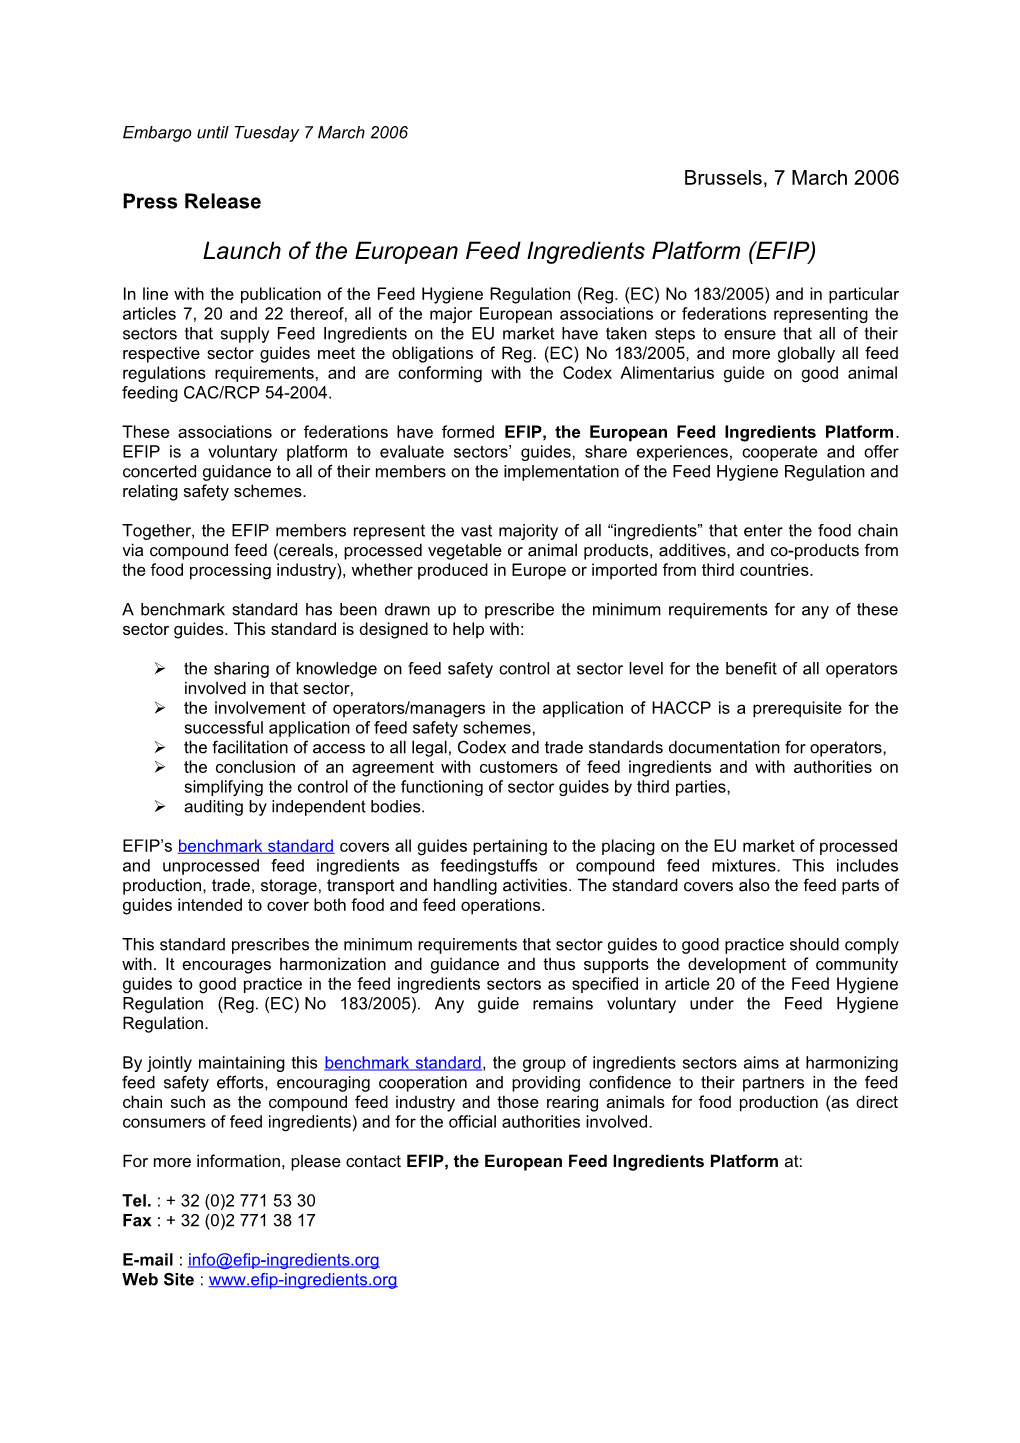 Launch of the European Feed Ingredients Platform (EFIP)